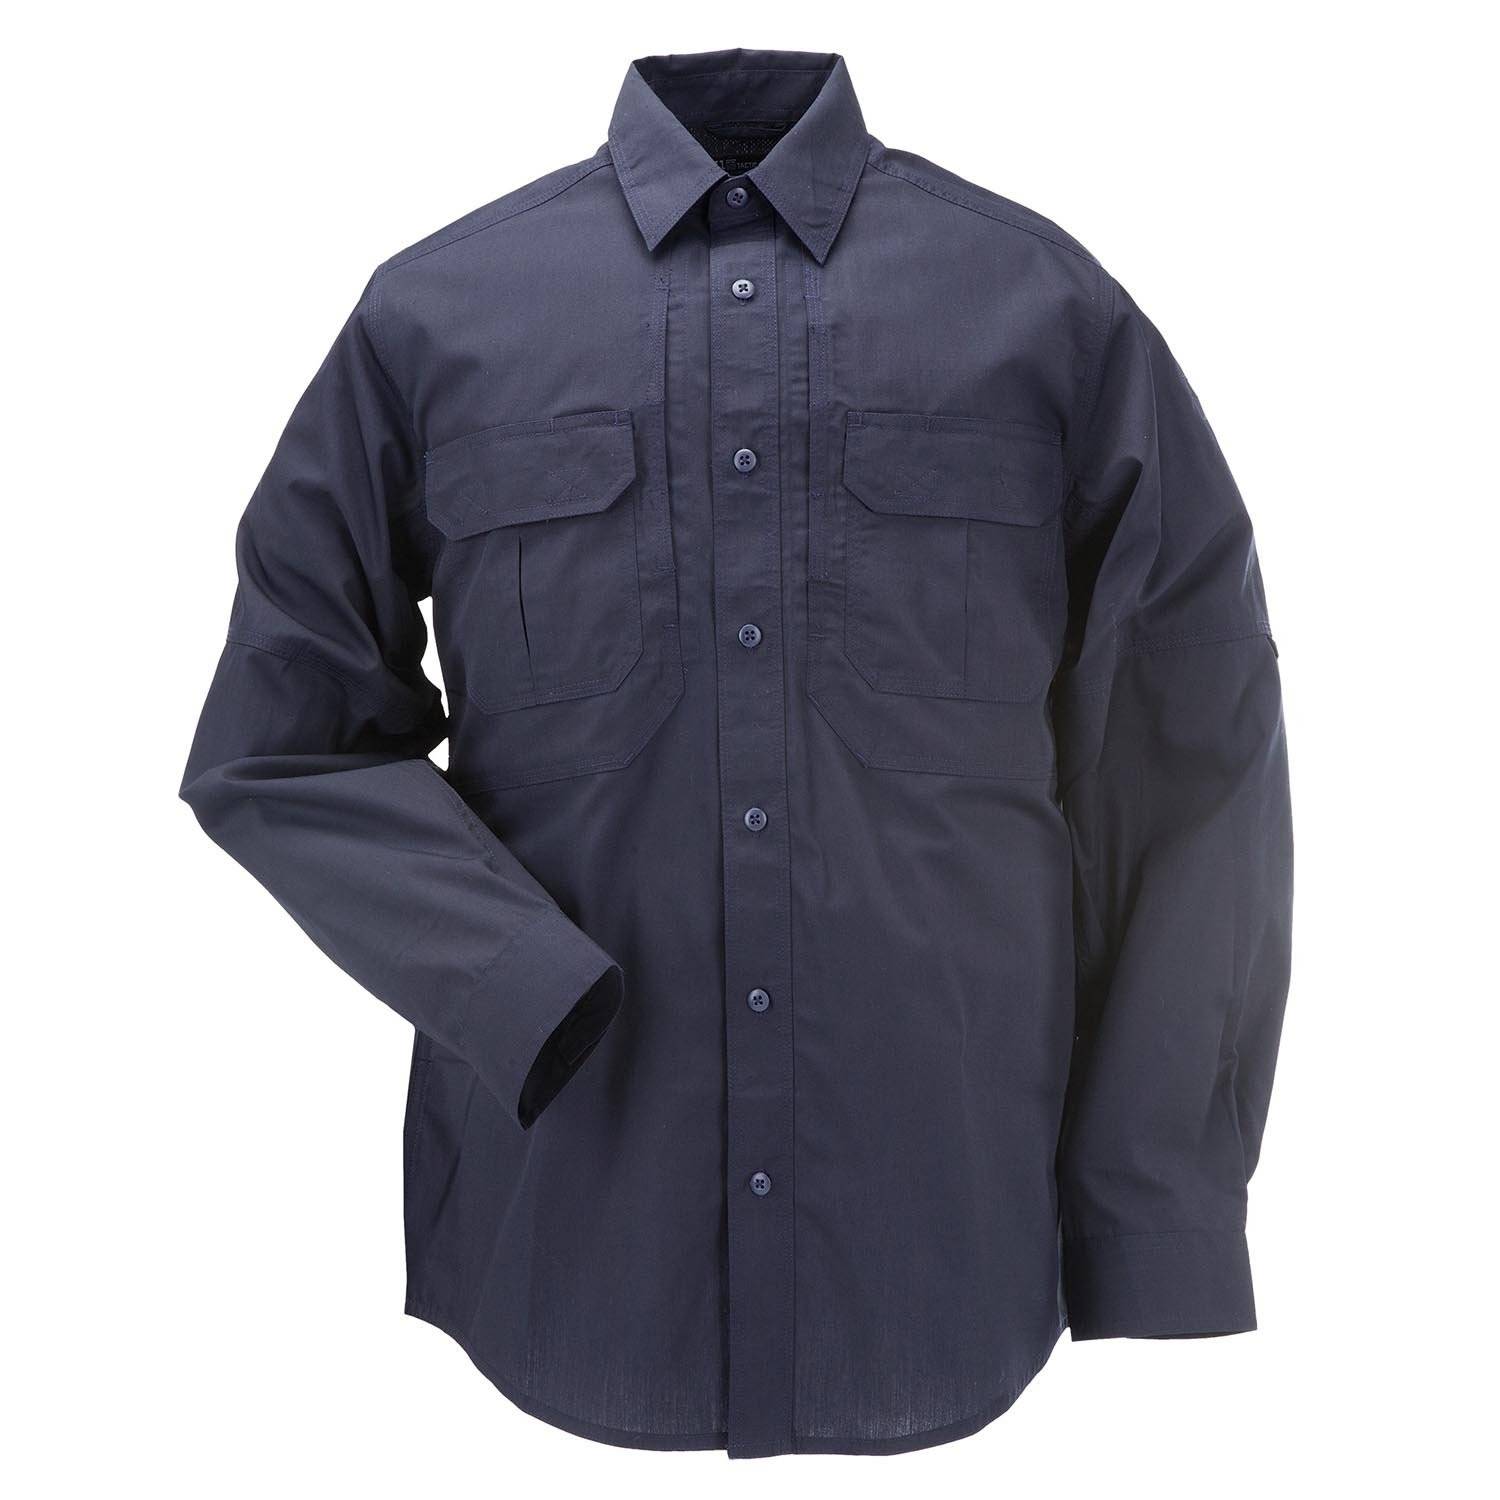 5.11 Taclite Pro Long Sleeve Shirt